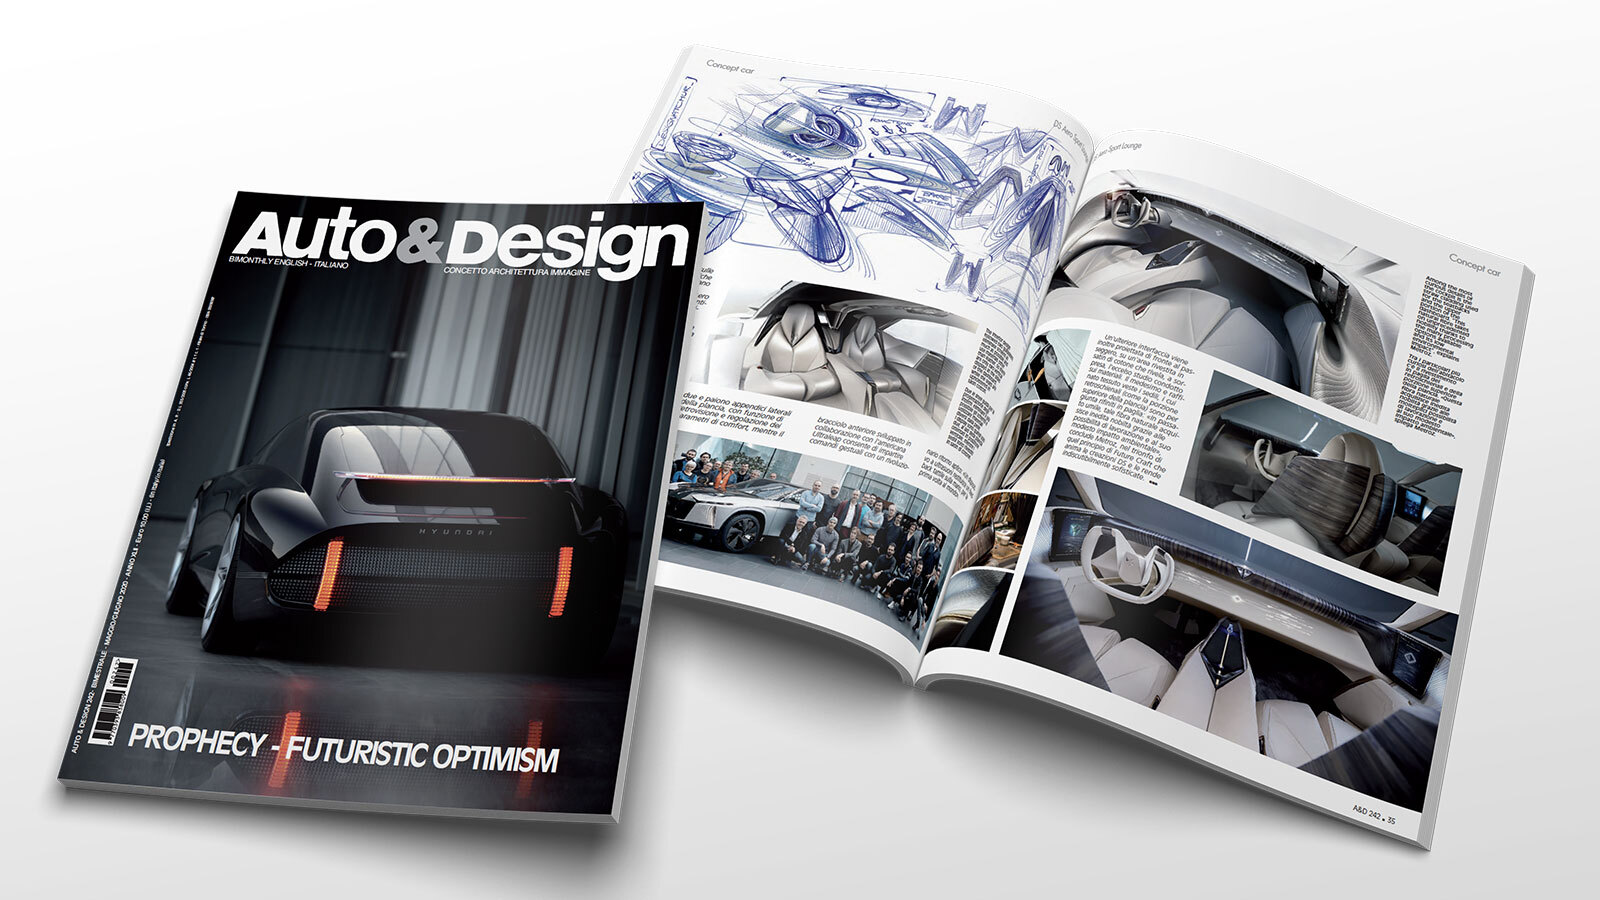 Auto Design Gesture control by Ultraleap inside luxGroupe PSA DS Automobile concept car with Ultraleap case study